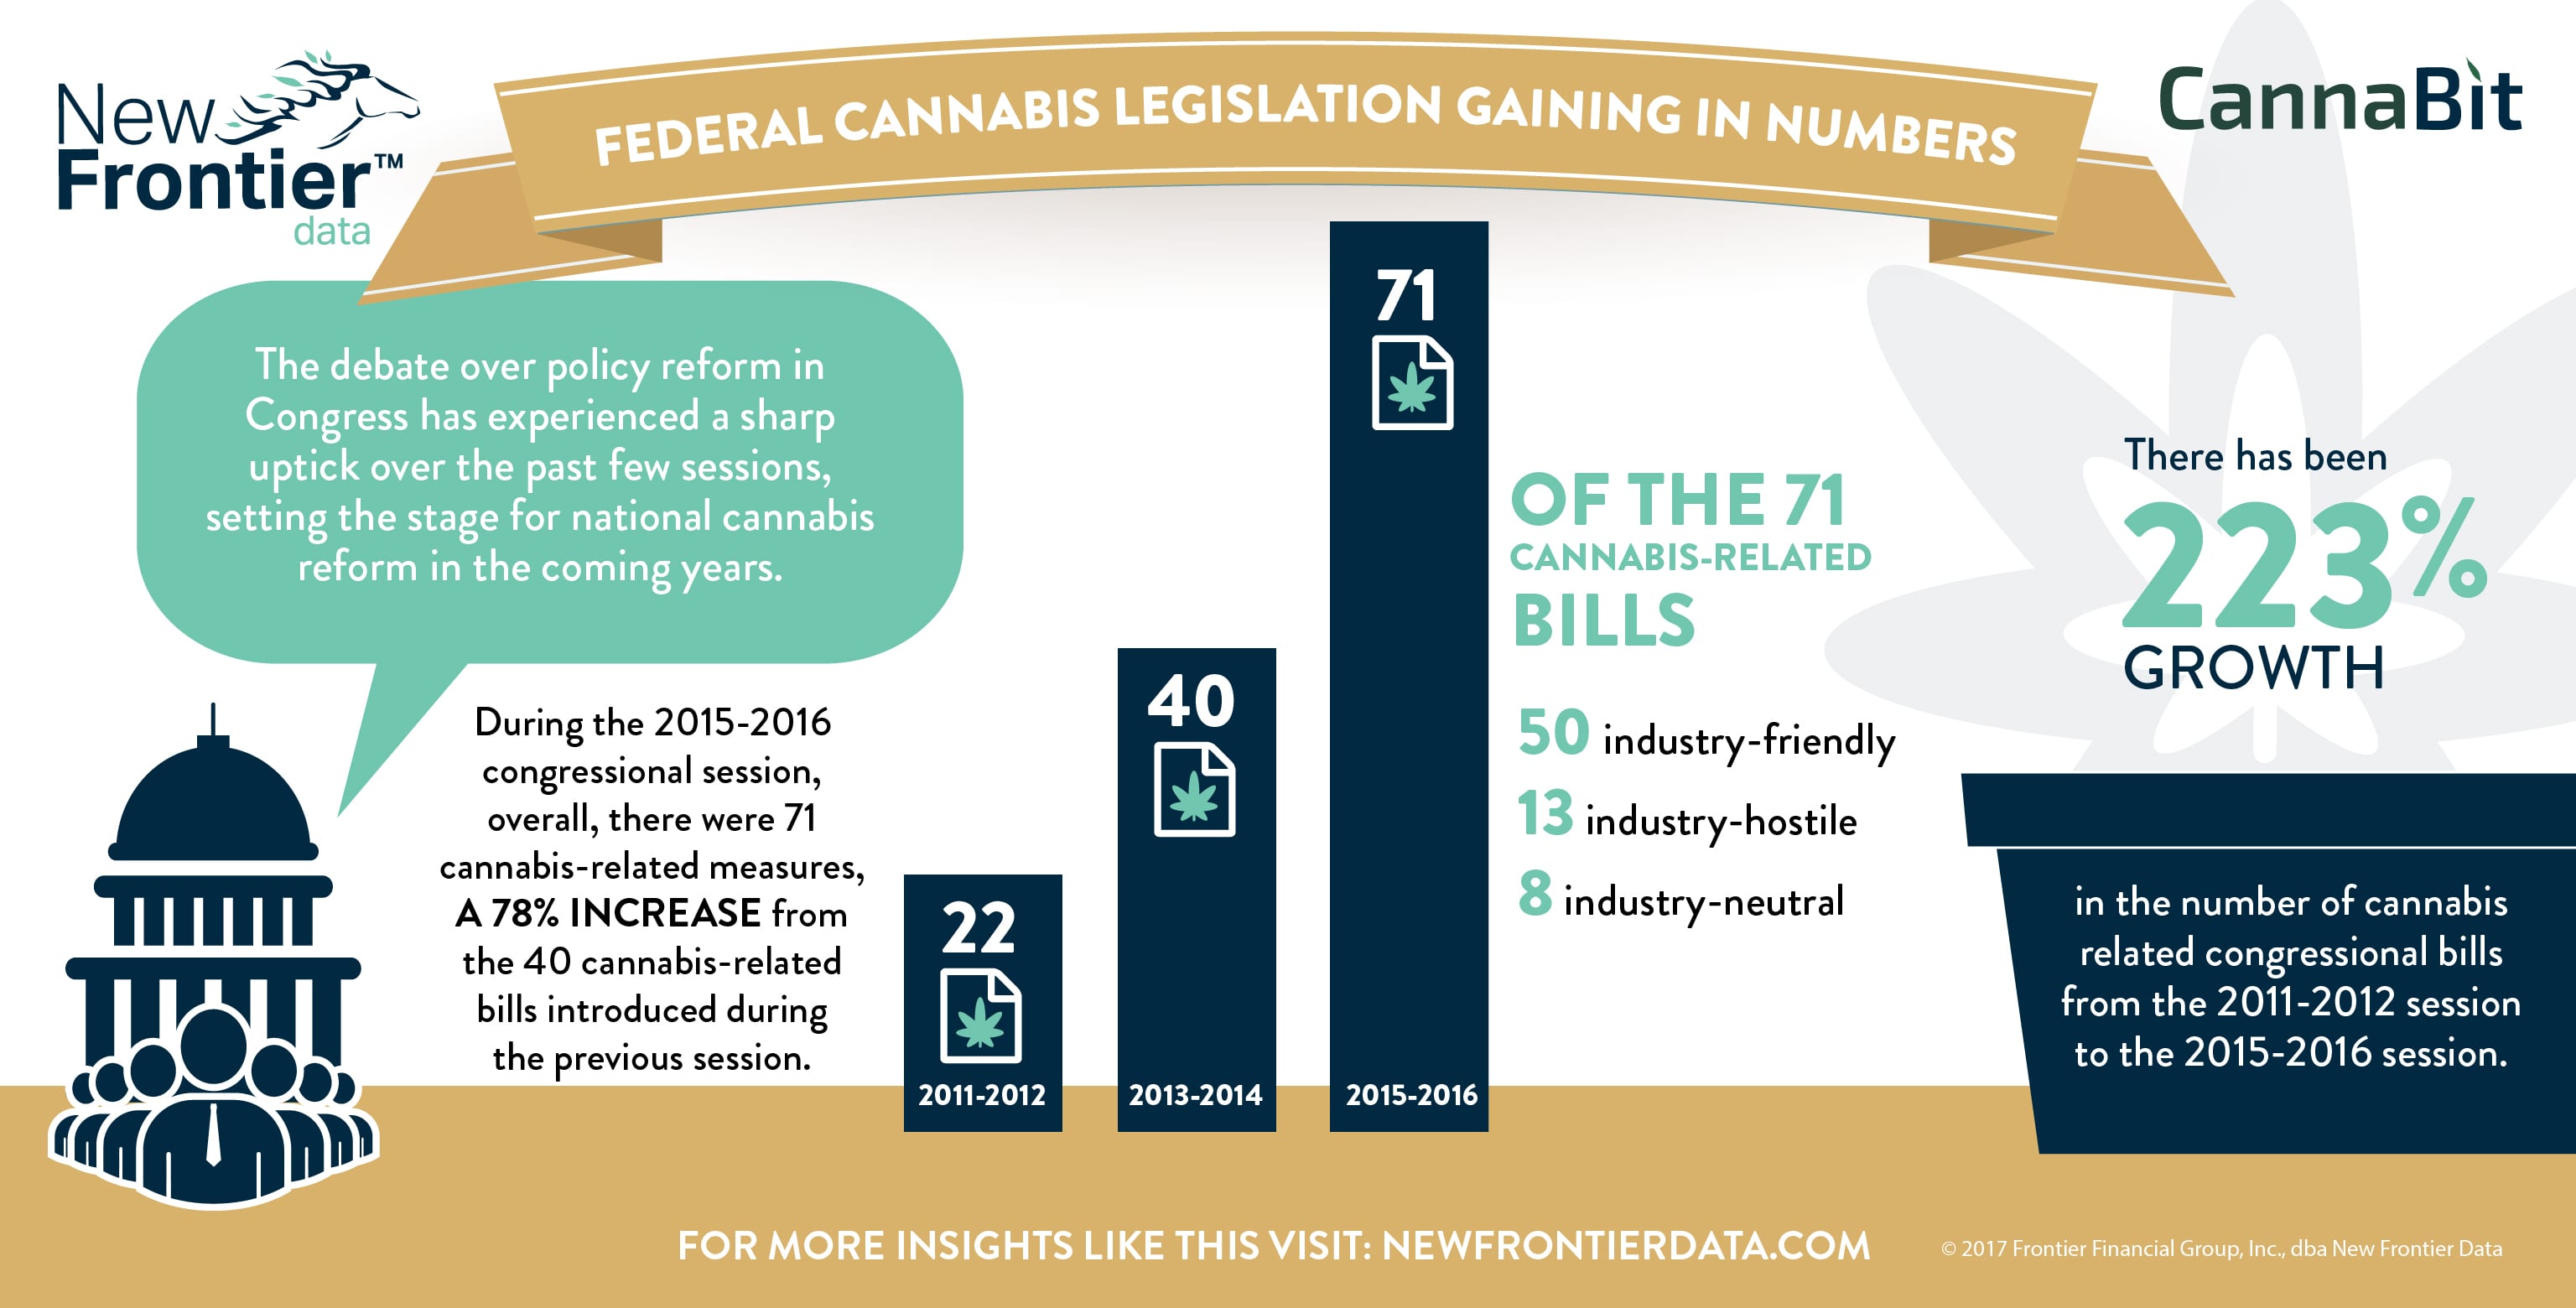 Cannabit: Federal Cannabis Legislation Gaining in Numbers / 03192017